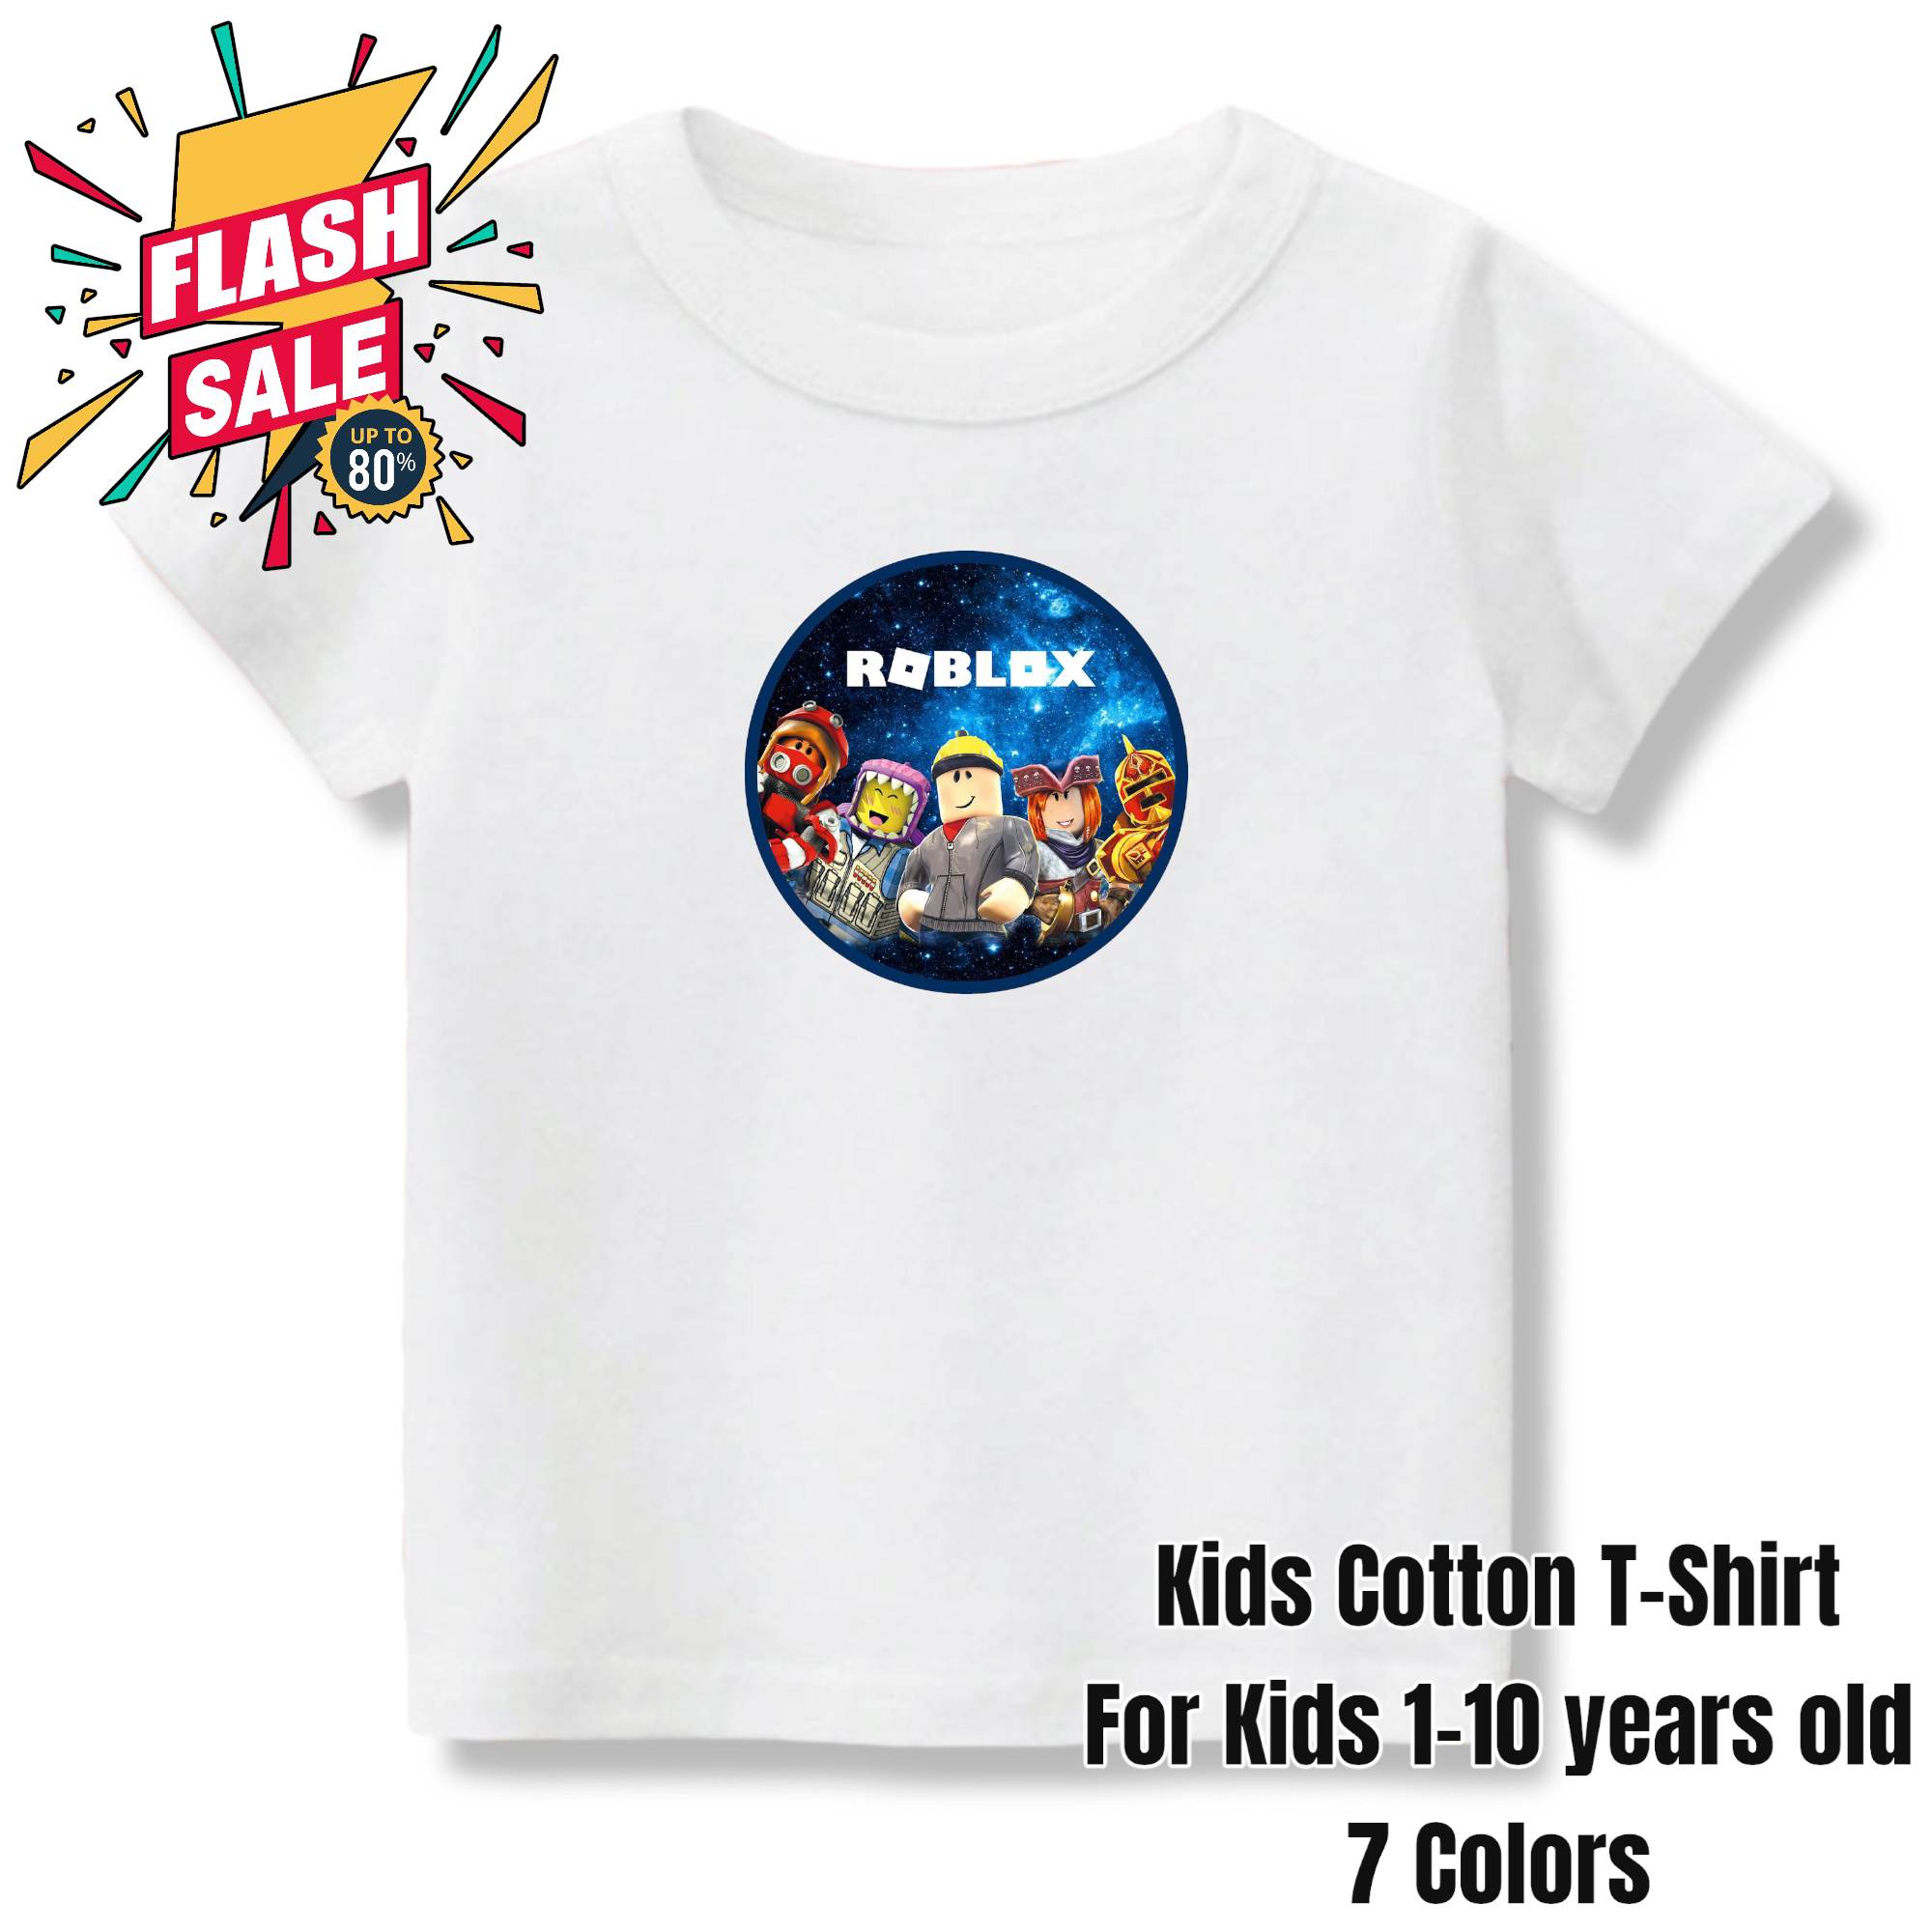 120, Colour 4) kids Boys Girls ROBLOX Anime Short sleeved tops children's  fashion t-shirts on OnBuy